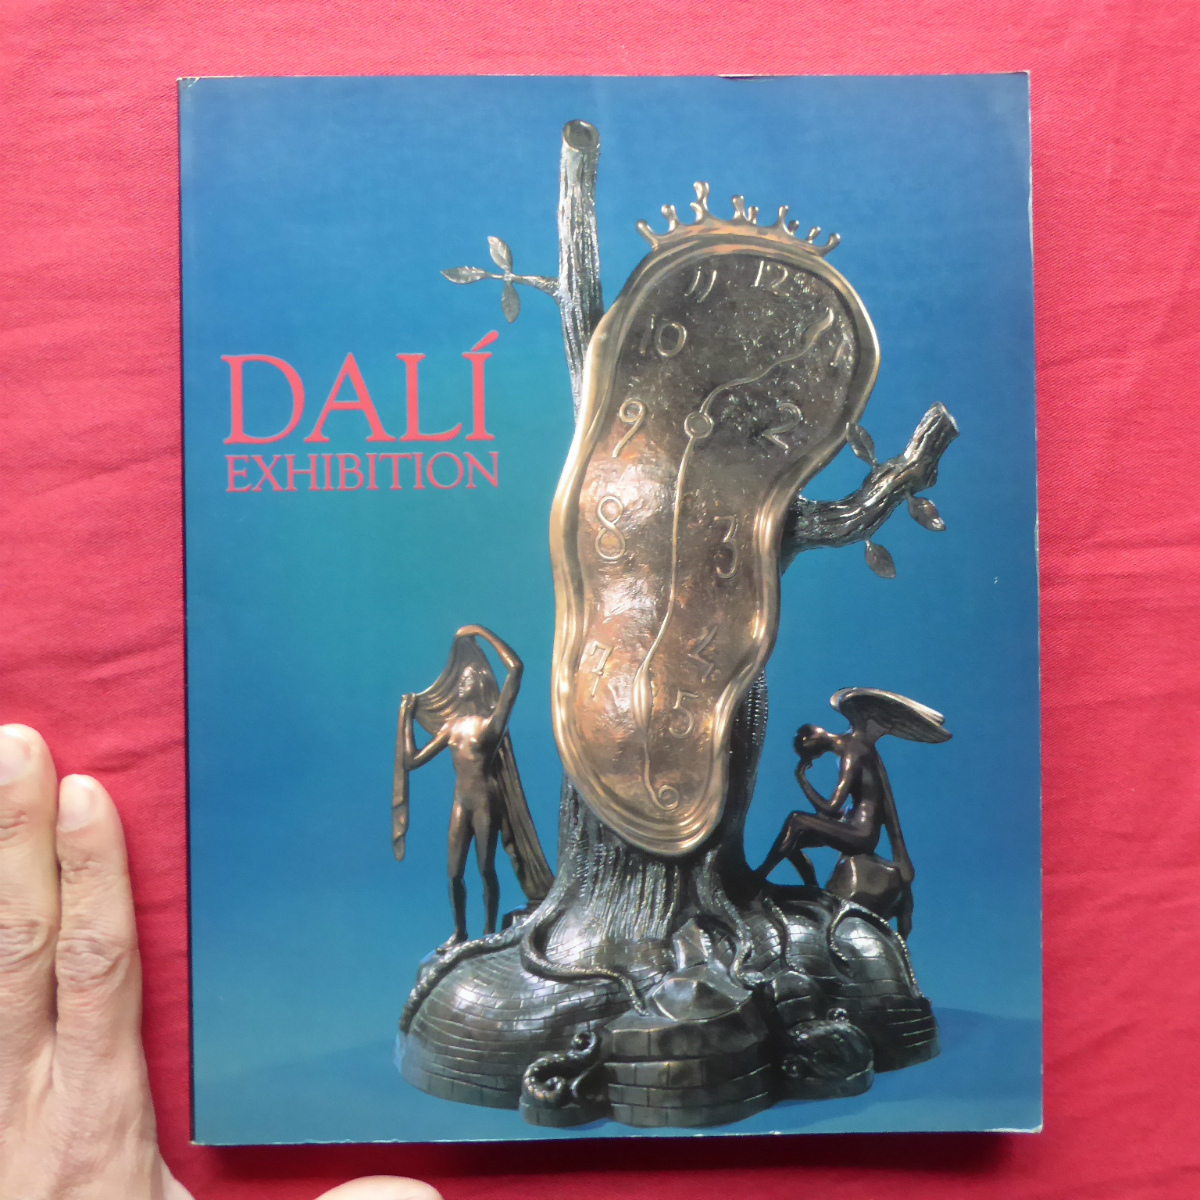 y2 Catalog [Dali Exhibition/1992, Nagoya Mitsukoshi, etc.] Nobuyuki Senashi: Constellations of Destiny - Dali, Gala, and the Two Salvadors/The Secret of Contrast in Dali's Works, Painting, Art Book, Collection, Catalog